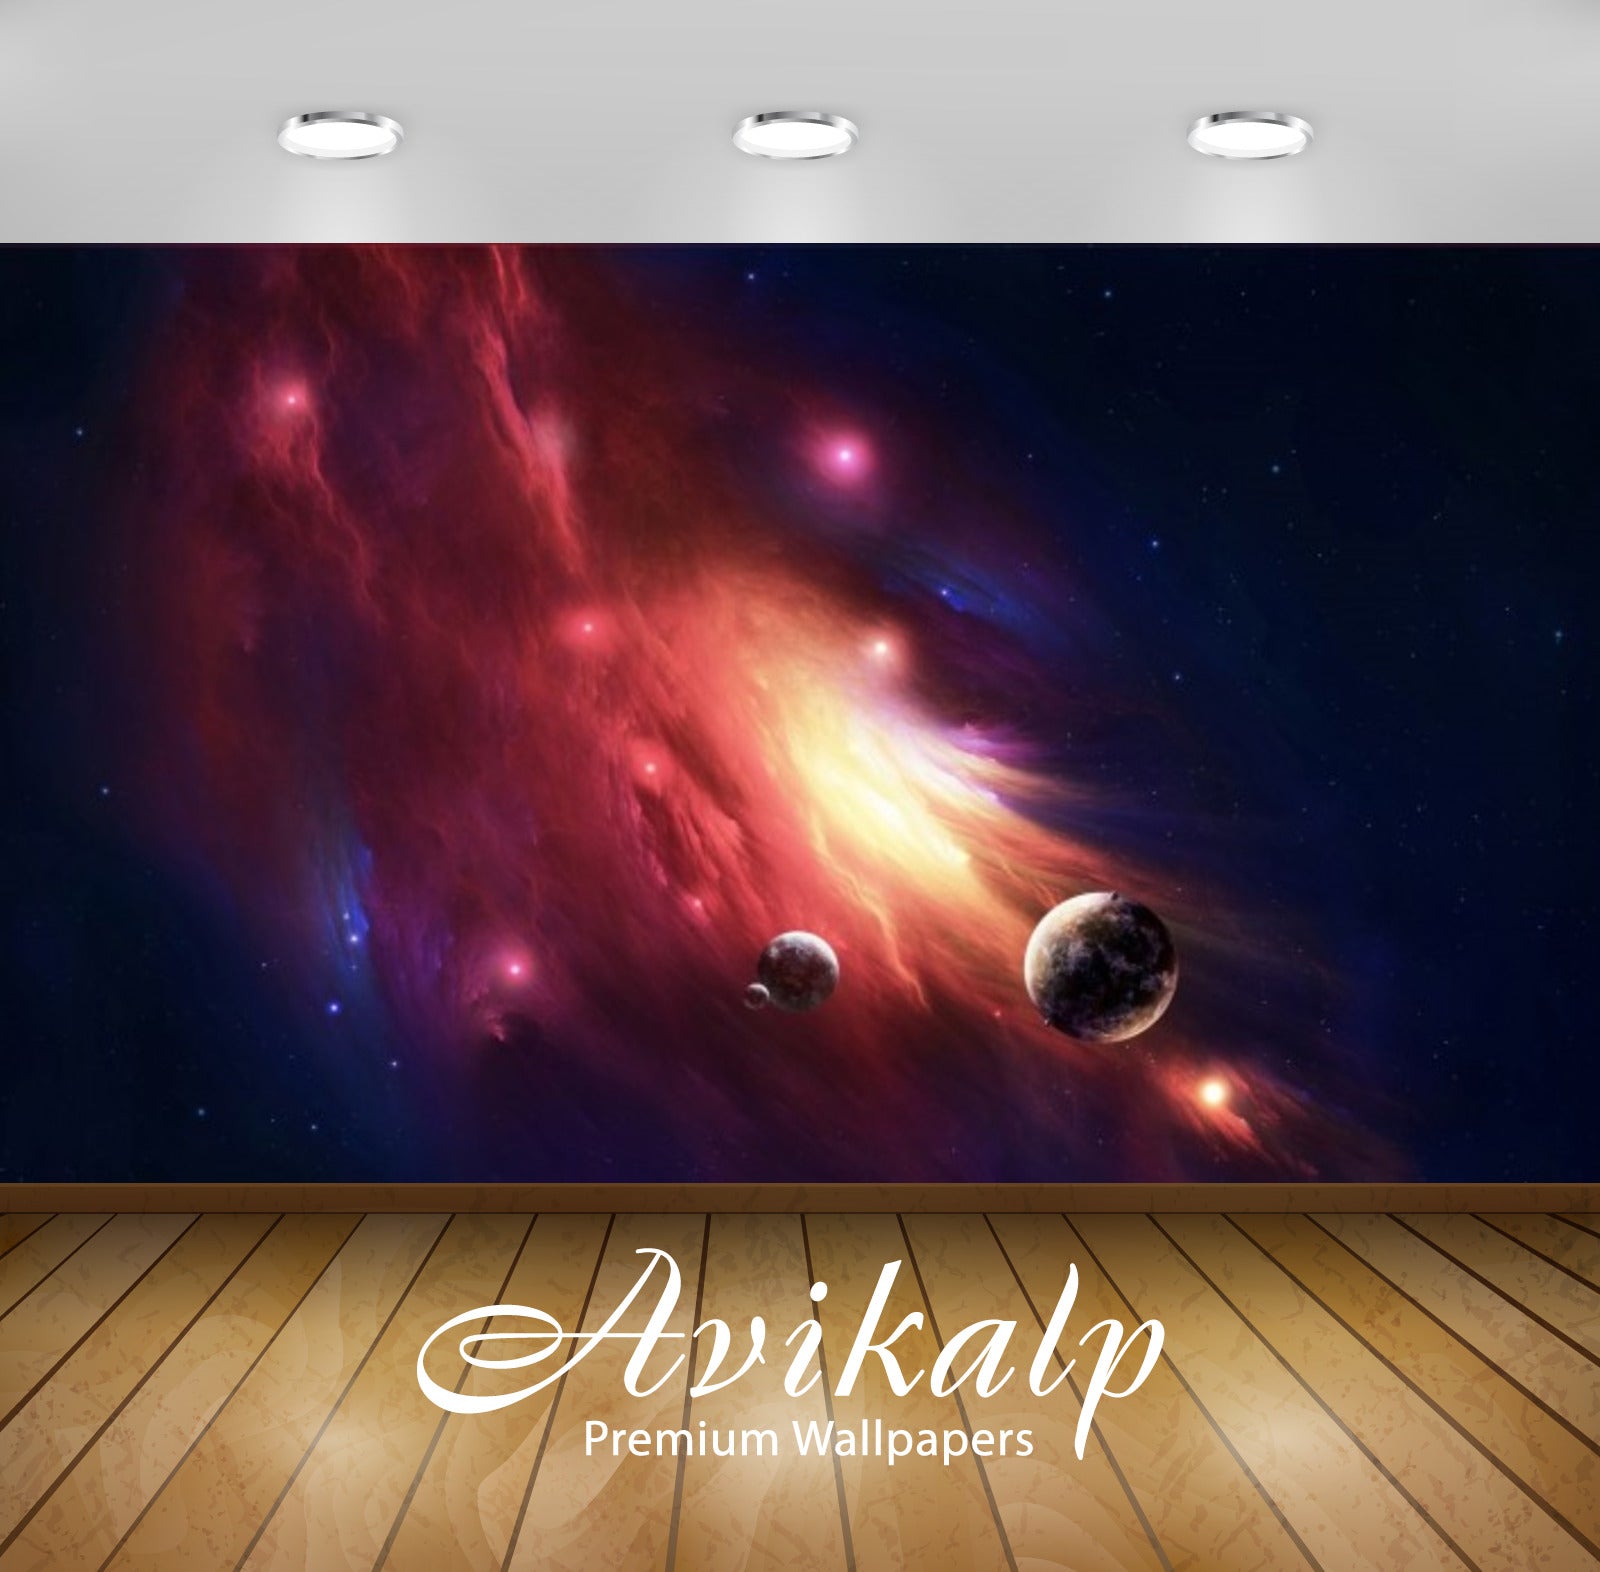 Avikalp Exclusive Awi2851 Nebula Elevation Full HD Wallpapers for Living room, Hall, Kids Room, Kitc